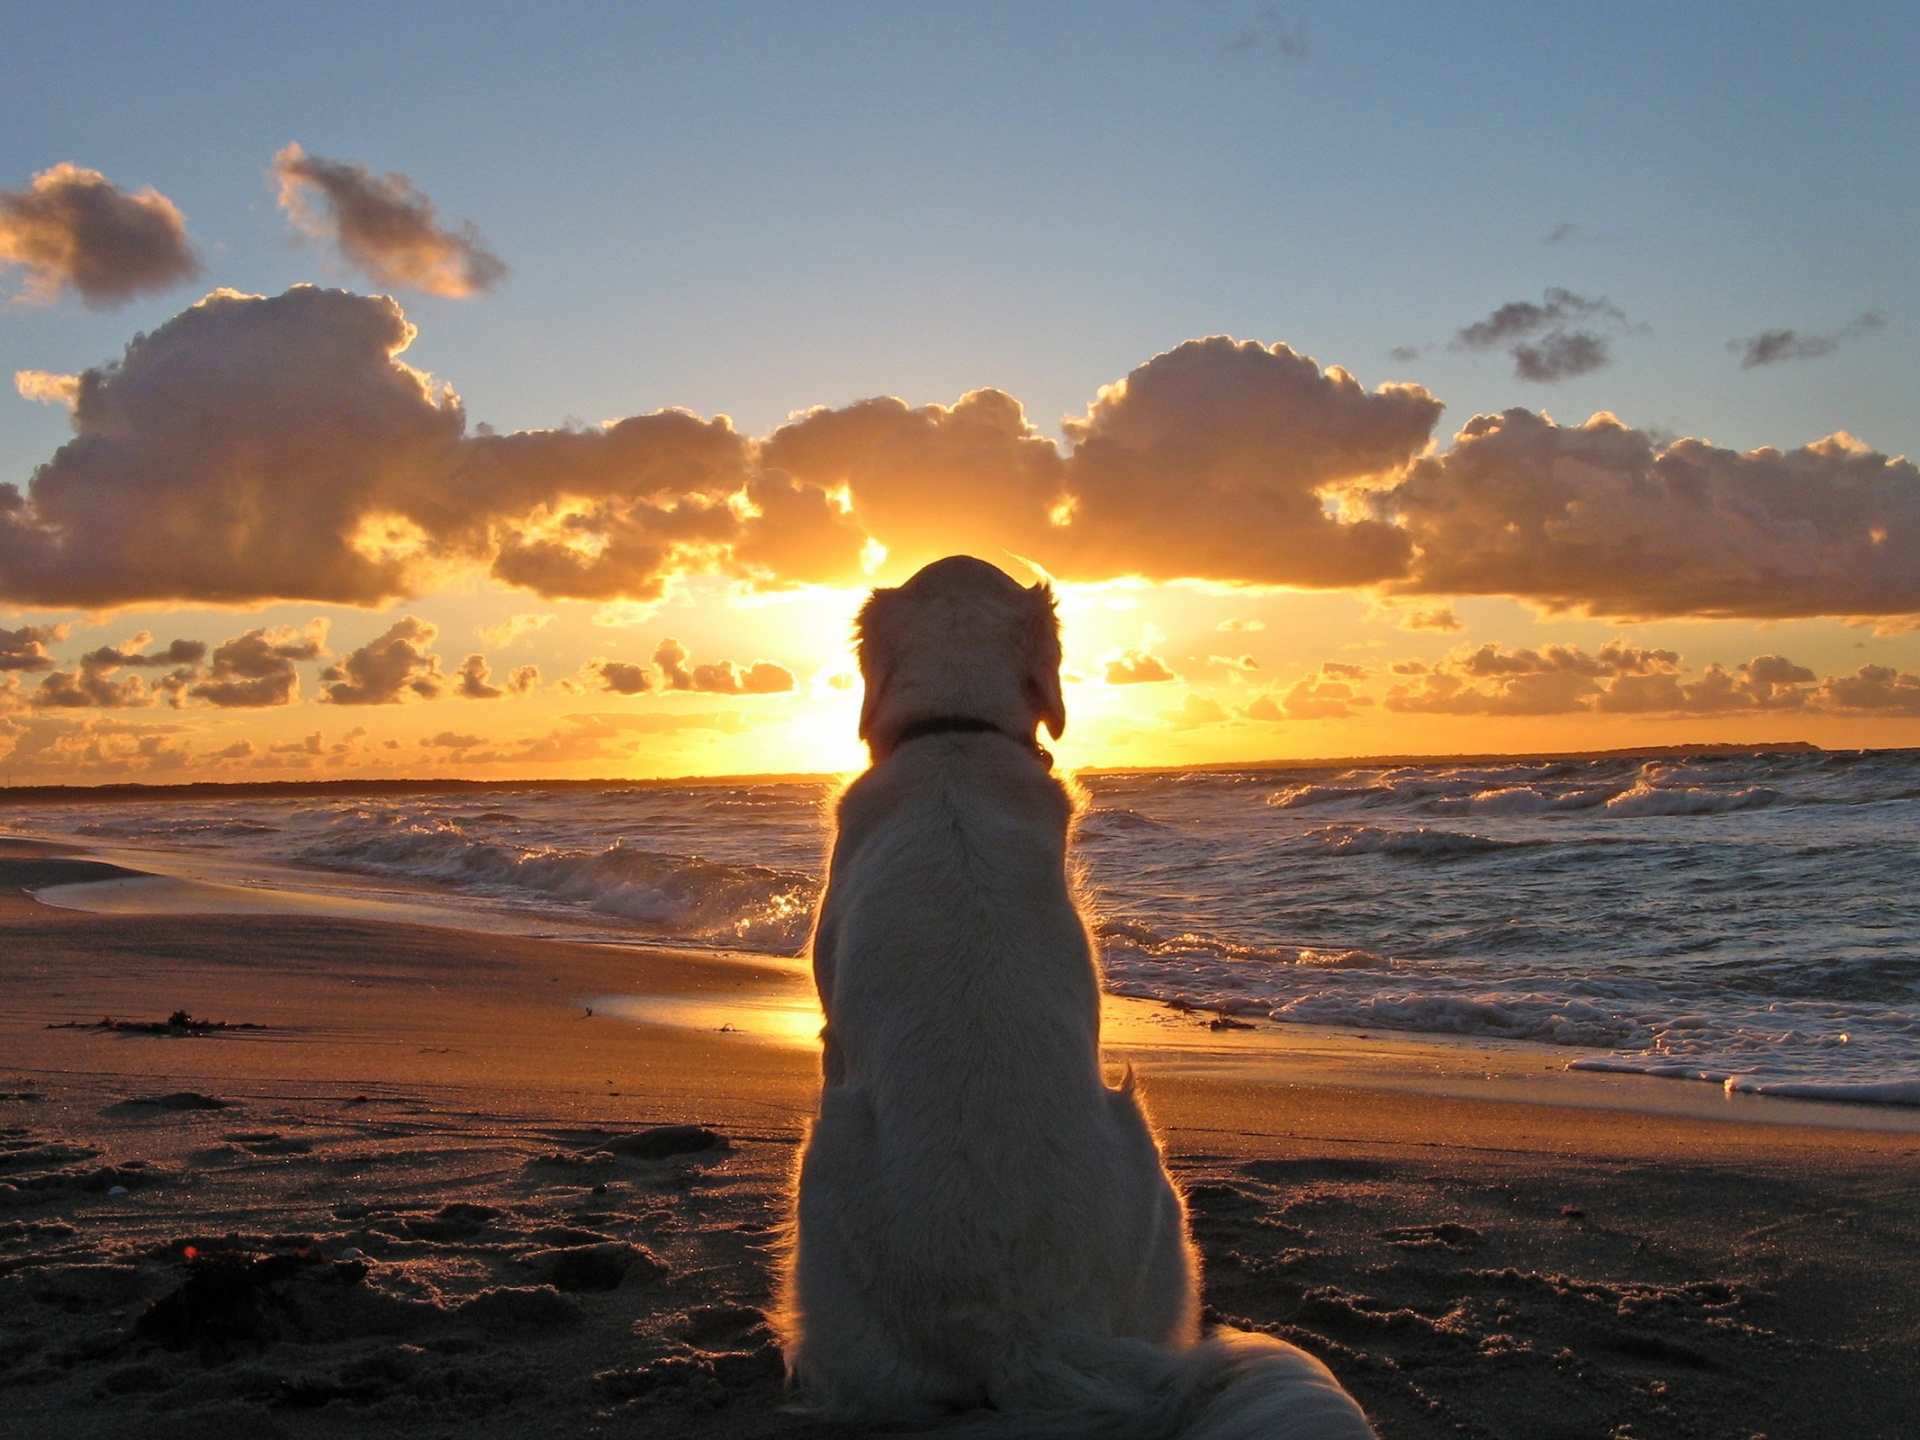 Dog-watch-Sunset-1920x1440.jpg